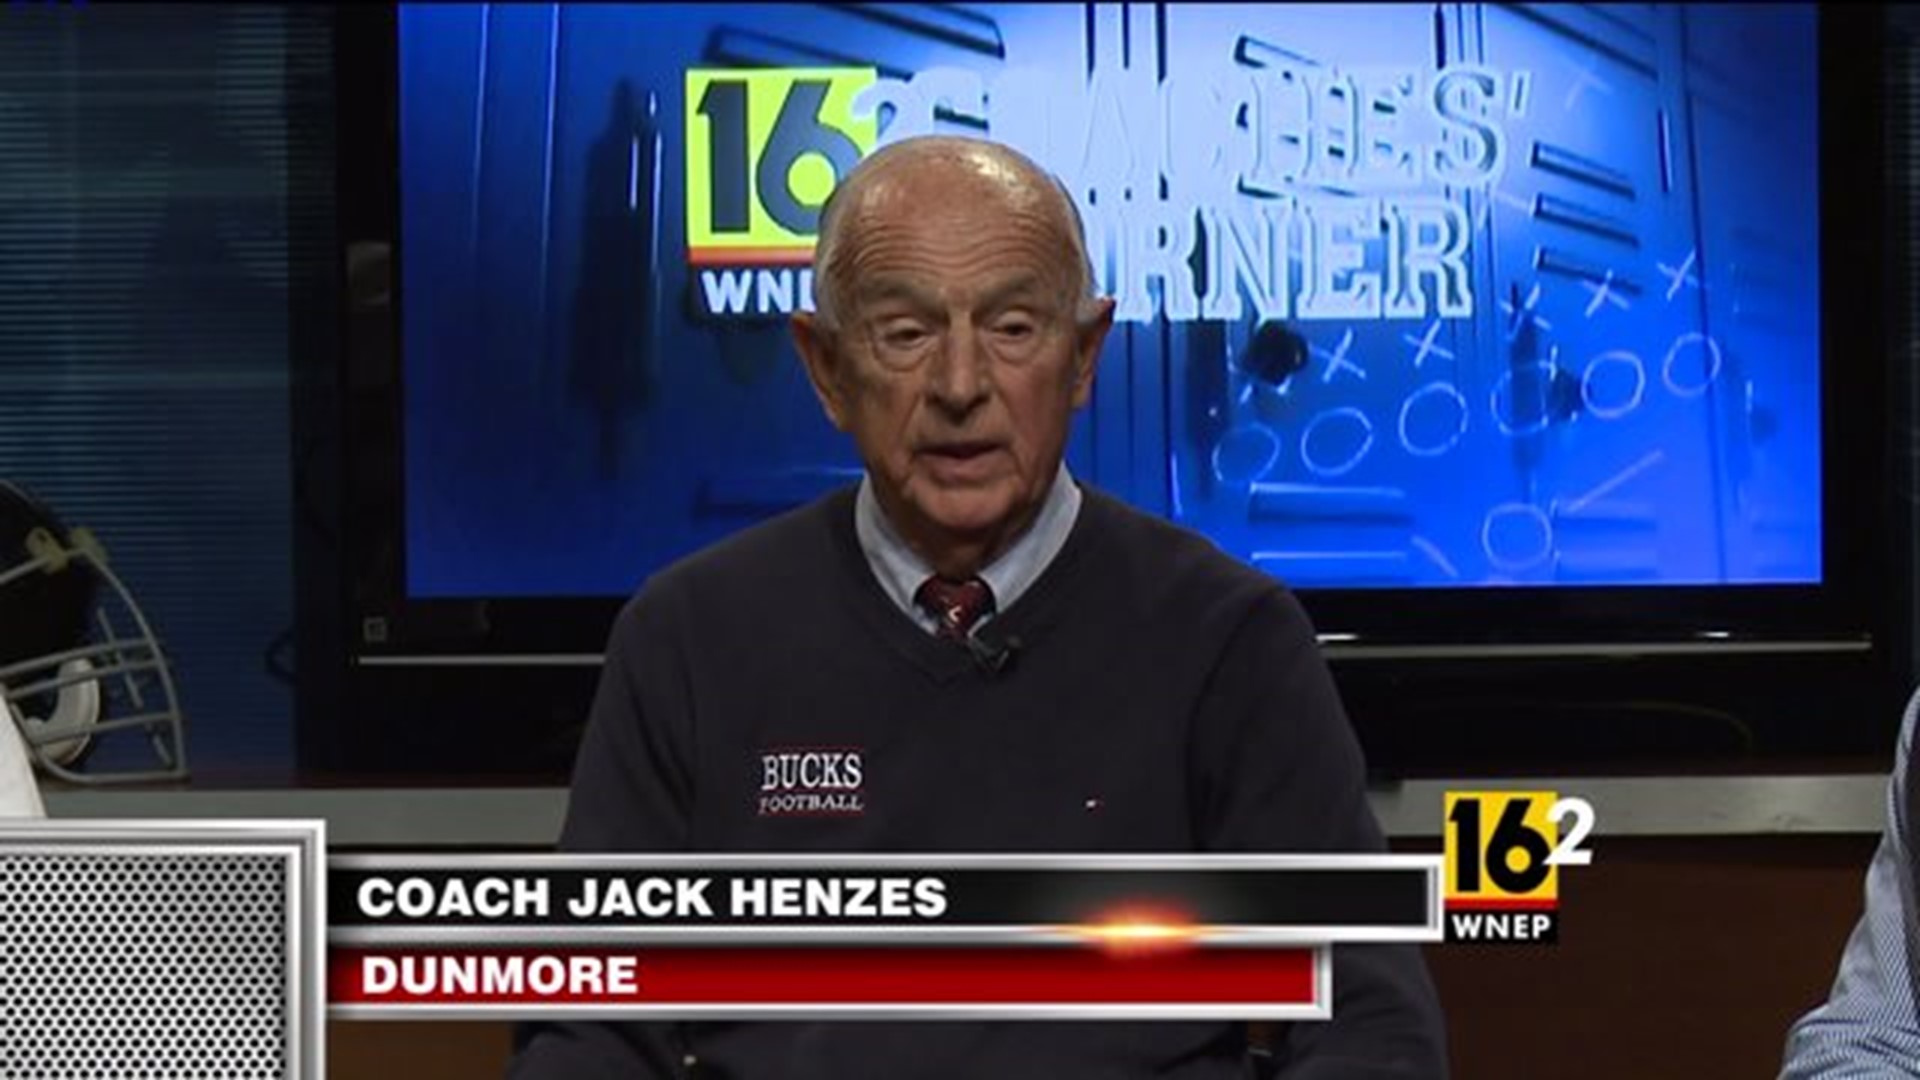 Dunmore Buck Head Coach Jack Henzes